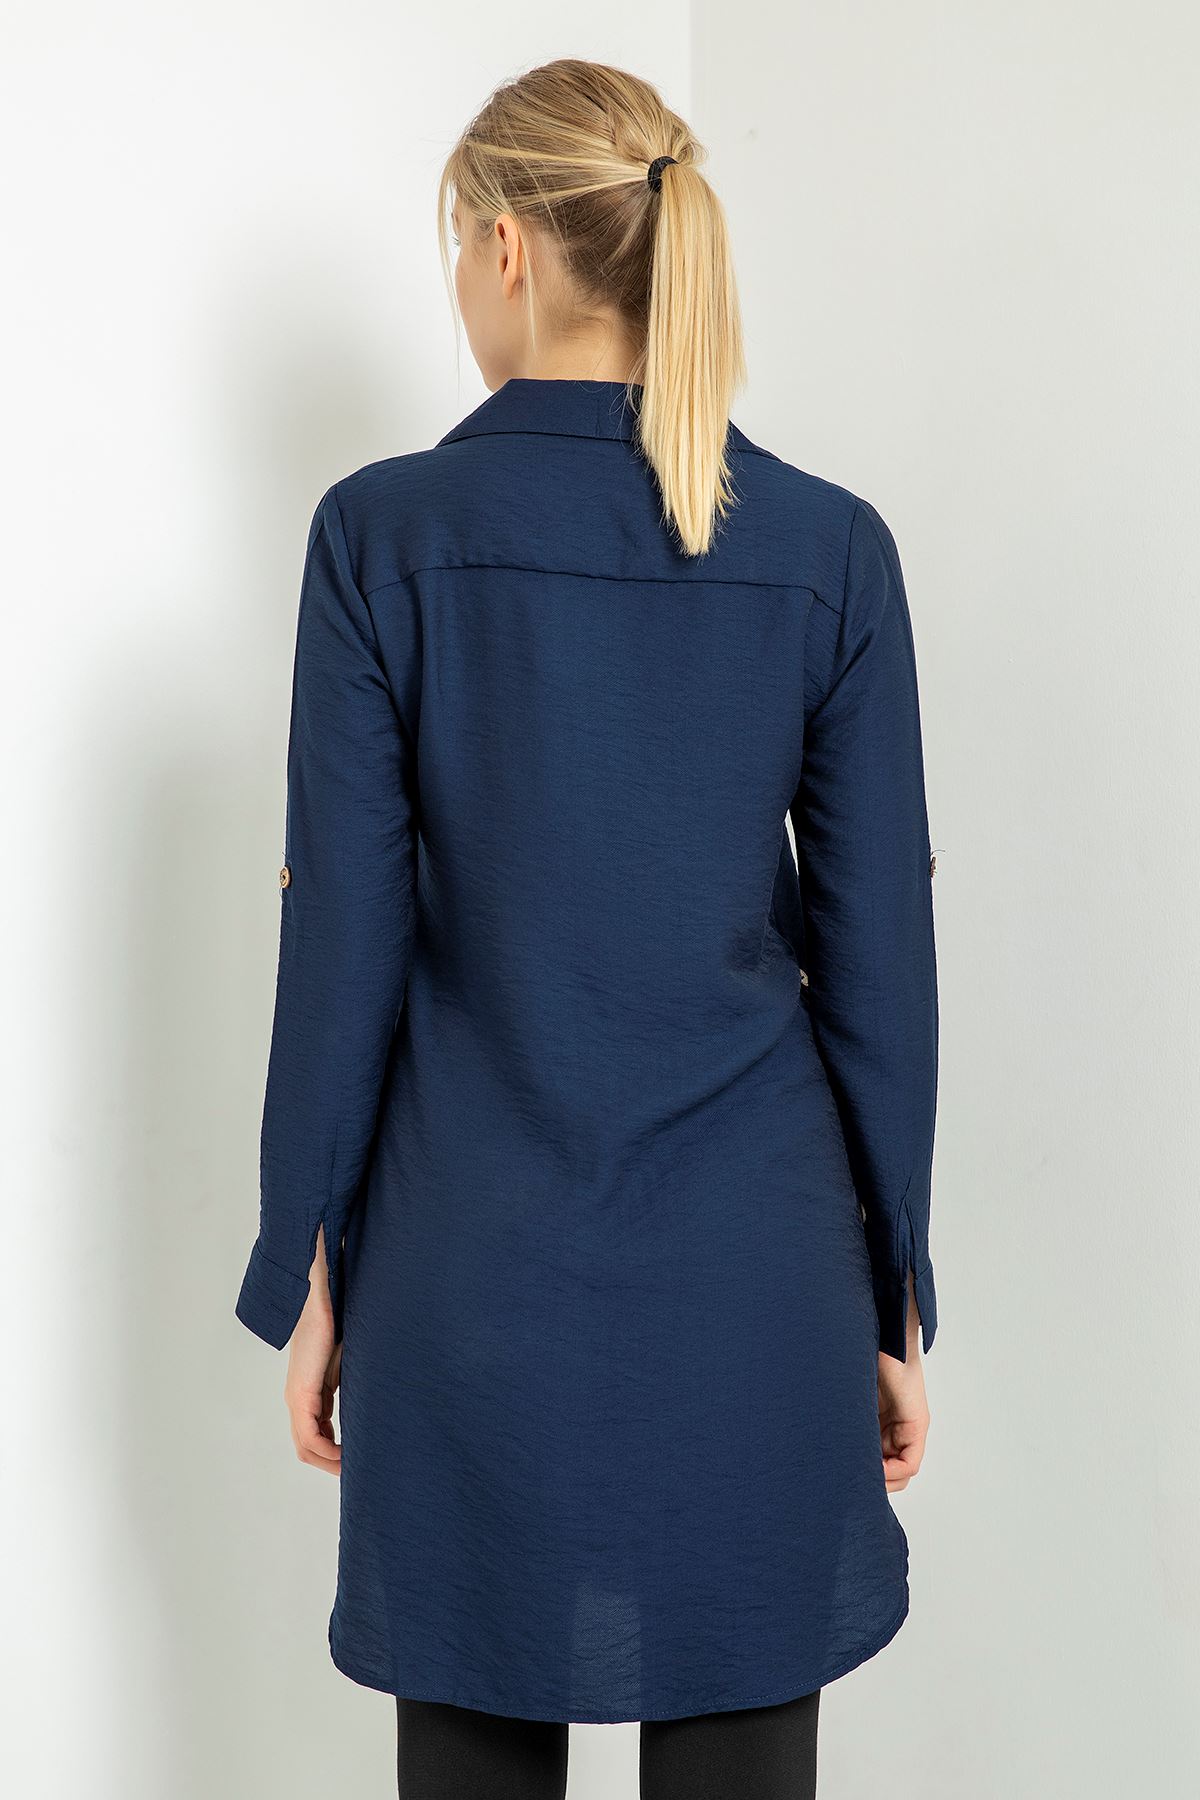 Bodrum Fabric Long Sleeve Shirt Collar Below Hip Pocket Detailed Women Tunic - Navy Blue 